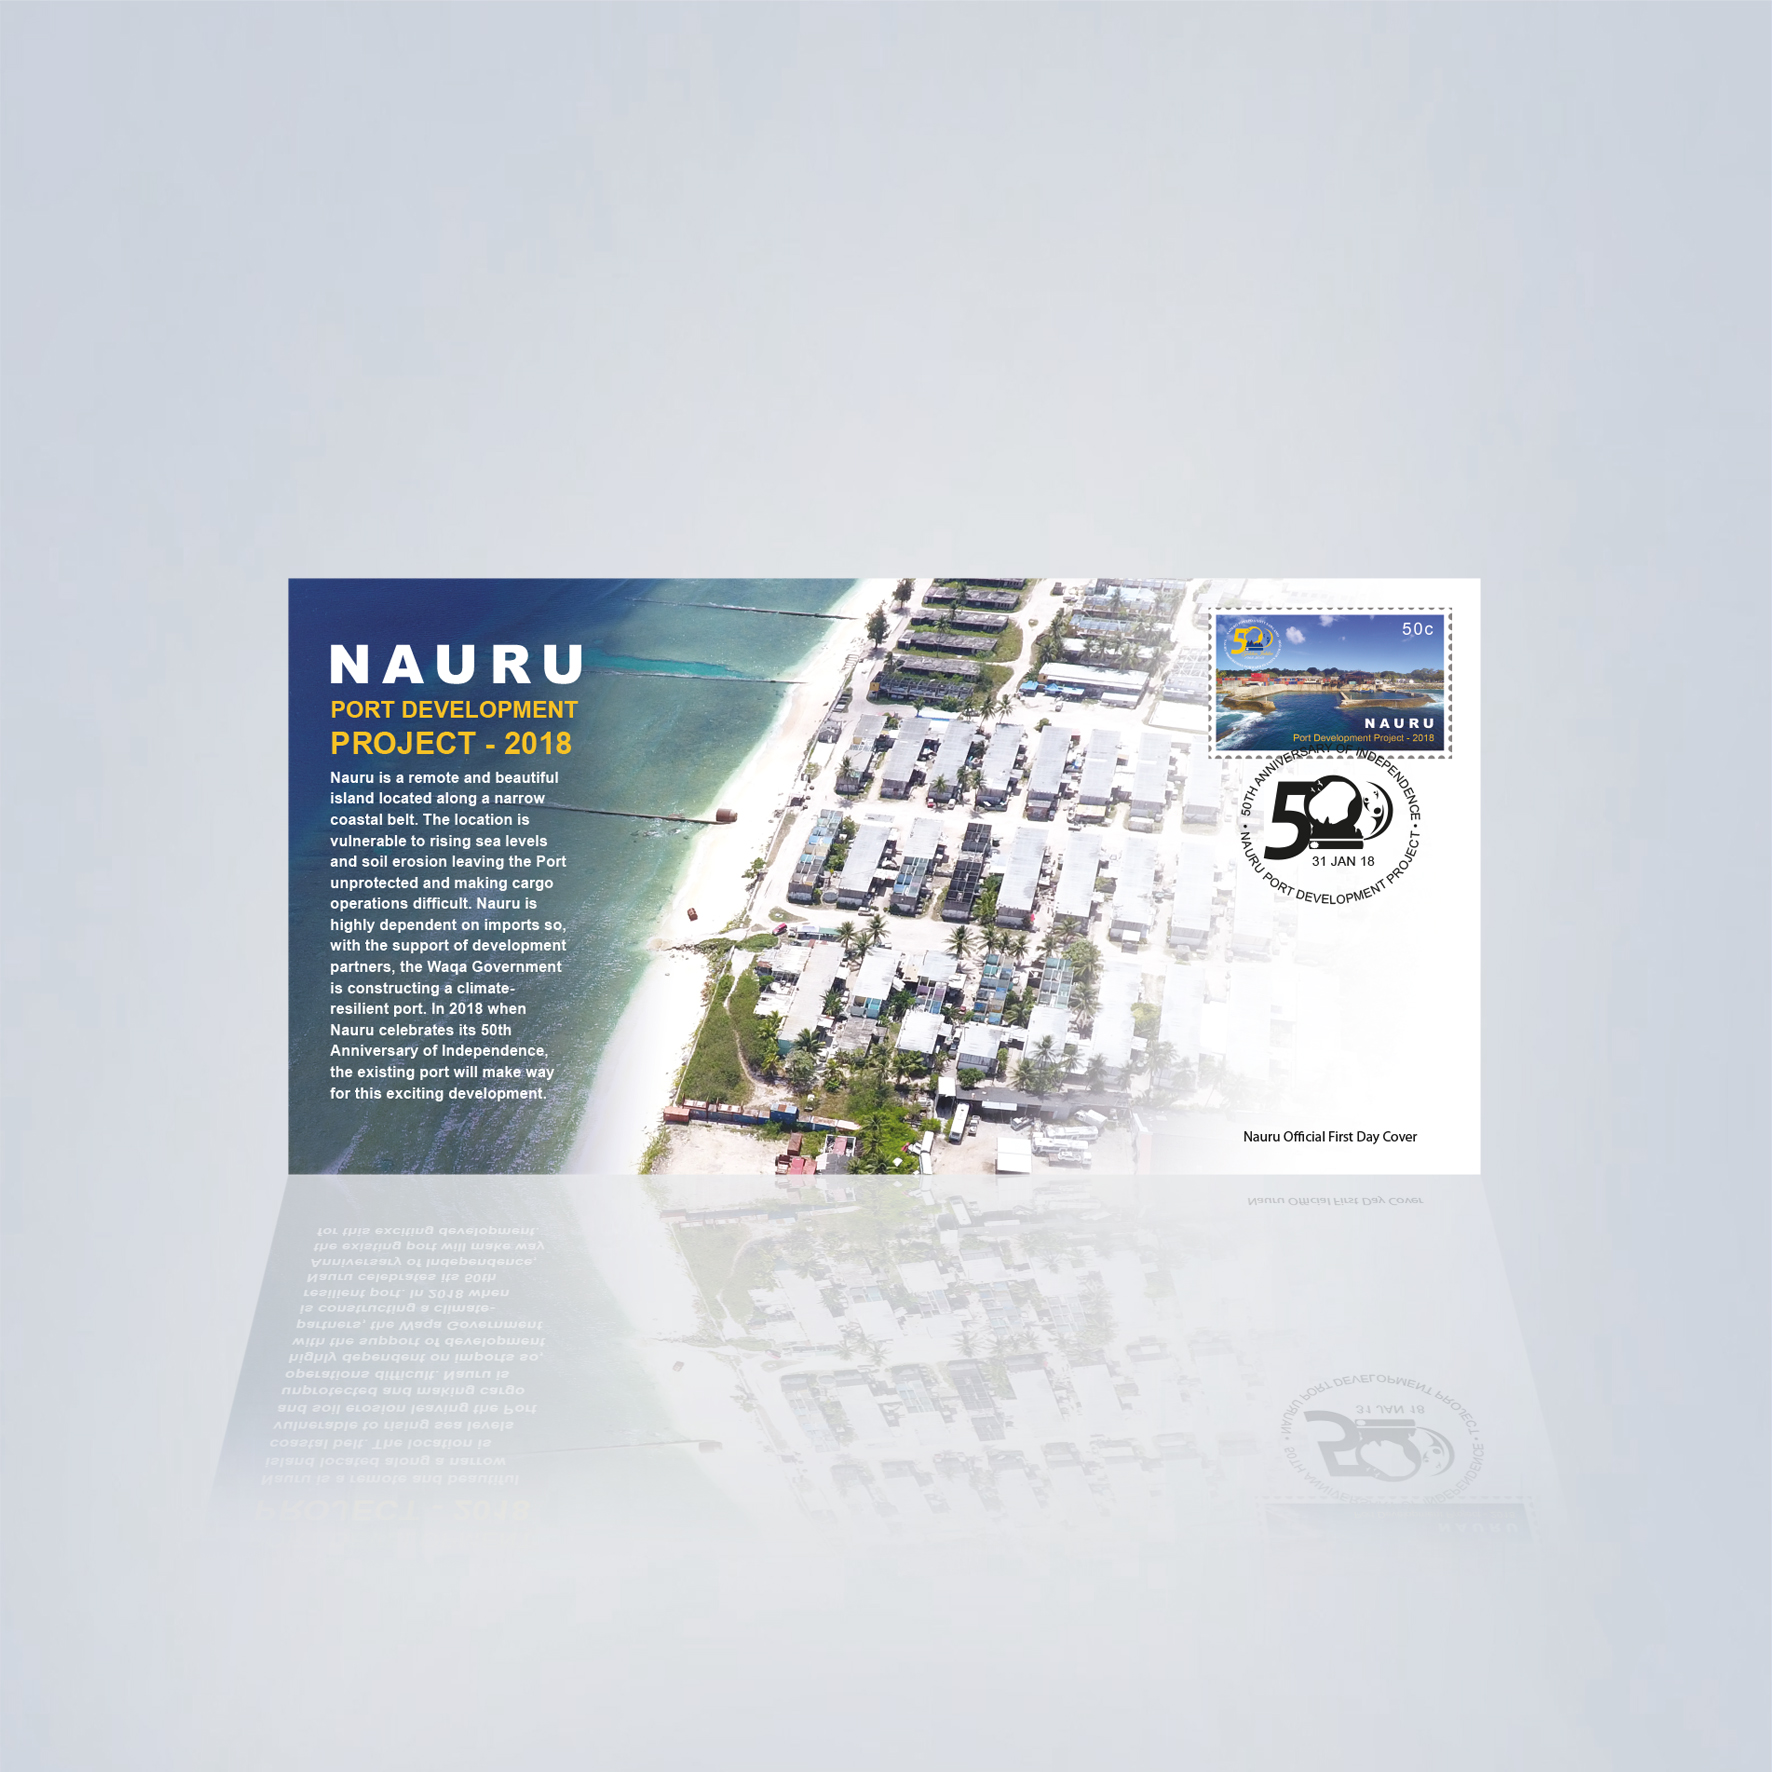 Nauru “Port Development Project 2018”